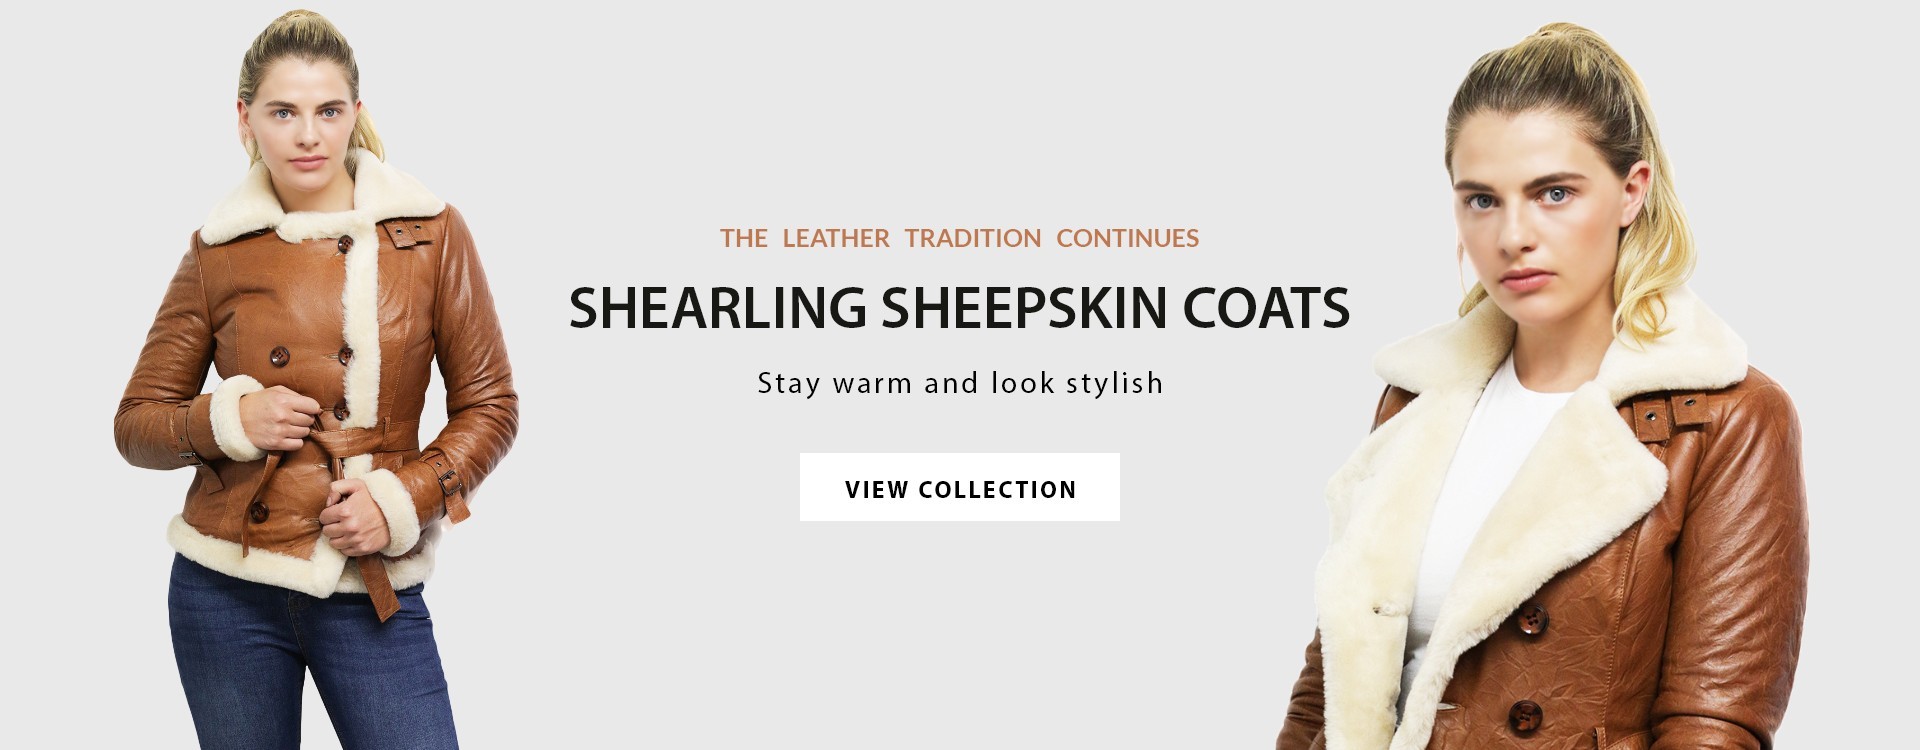 Womens leather shearling sheepskin coat